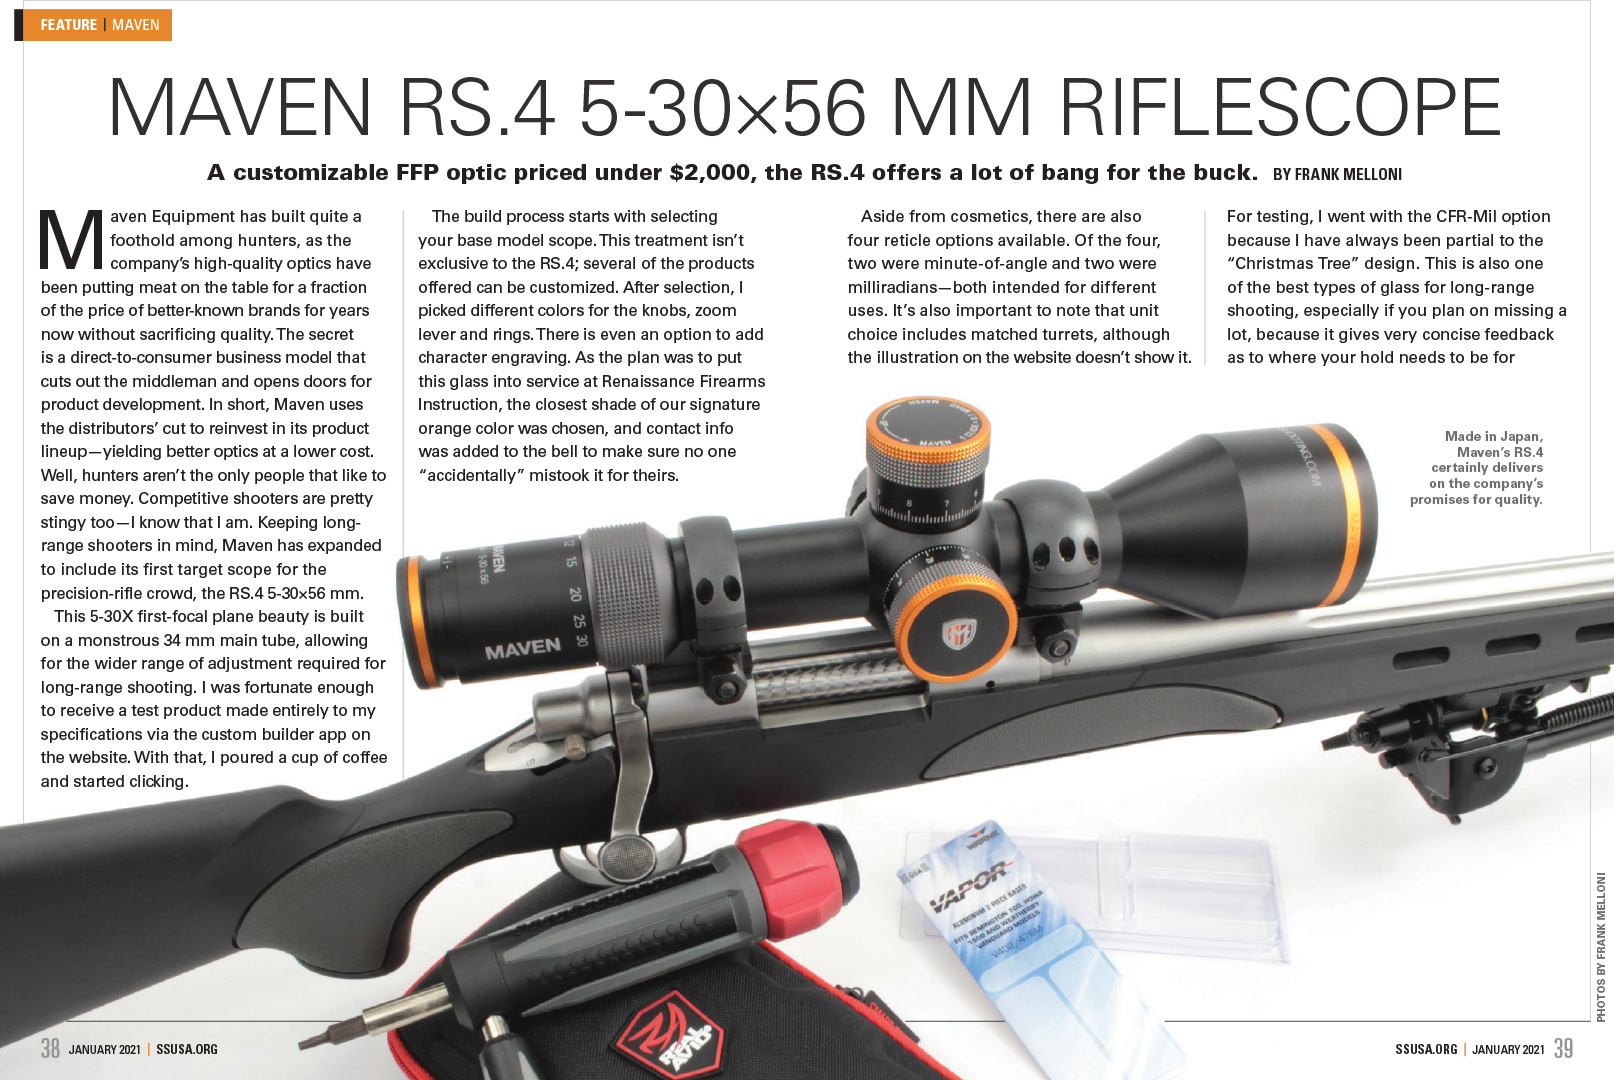 Maven RS.4 5-30x56 mm riflescope review